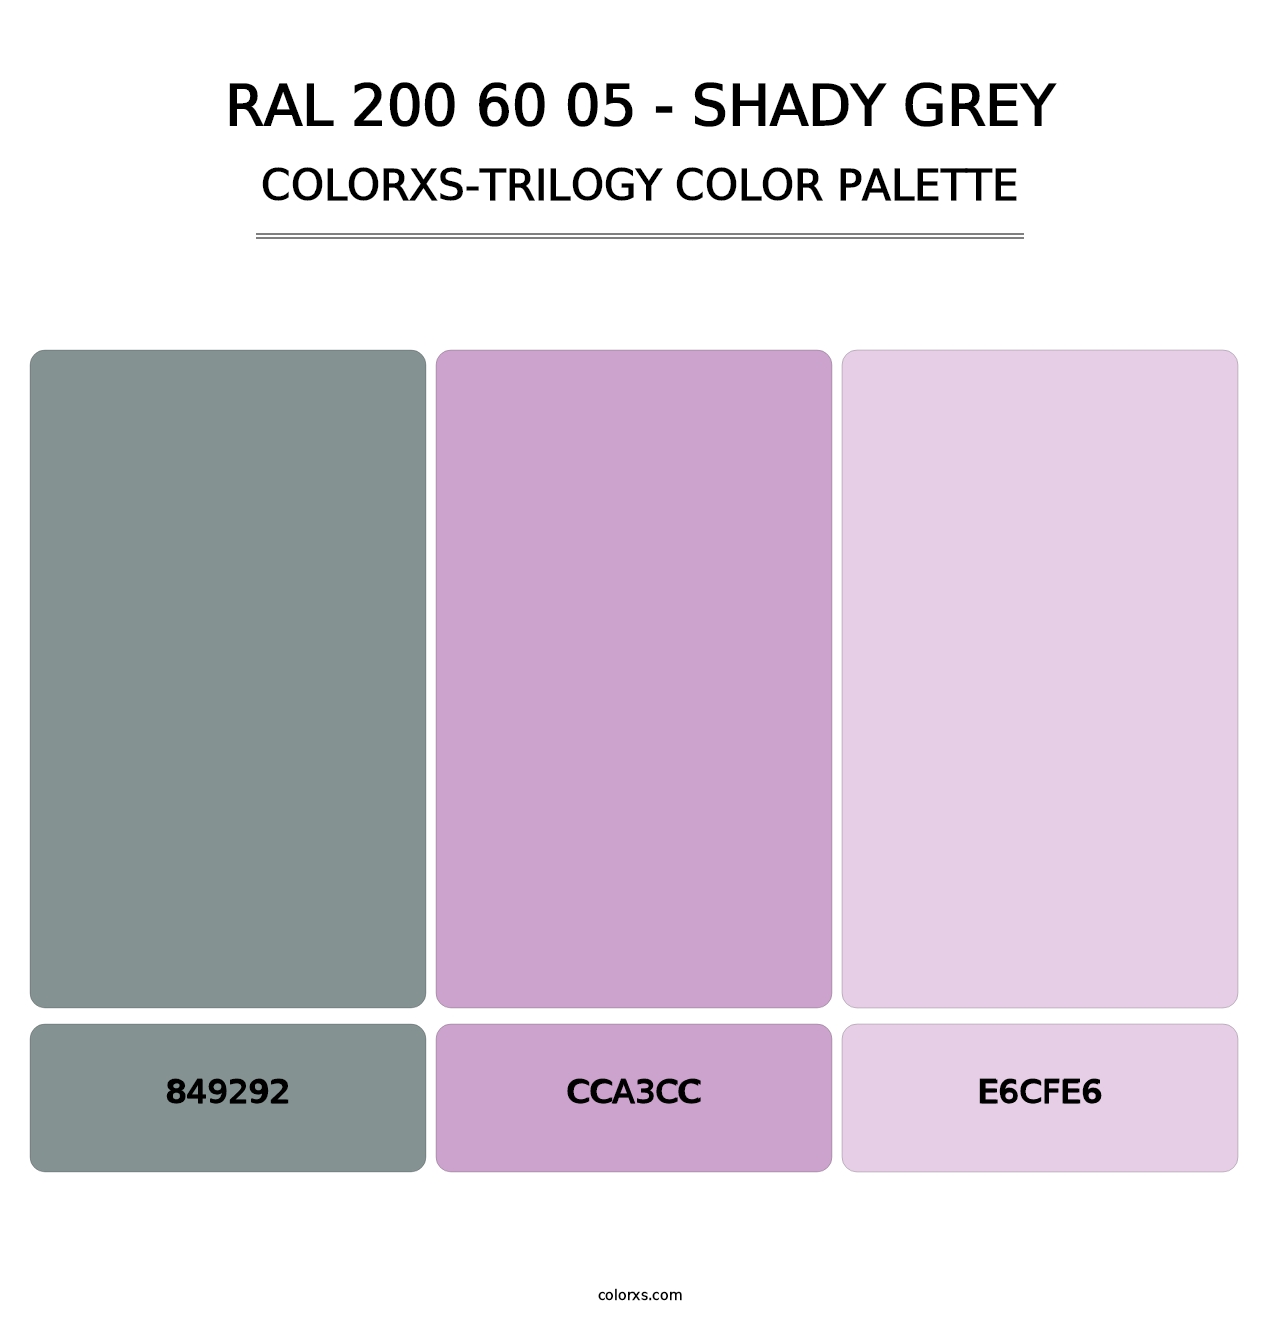 RAL 200 60 05 - Shady Grey - Colorxs Trilogy Palette